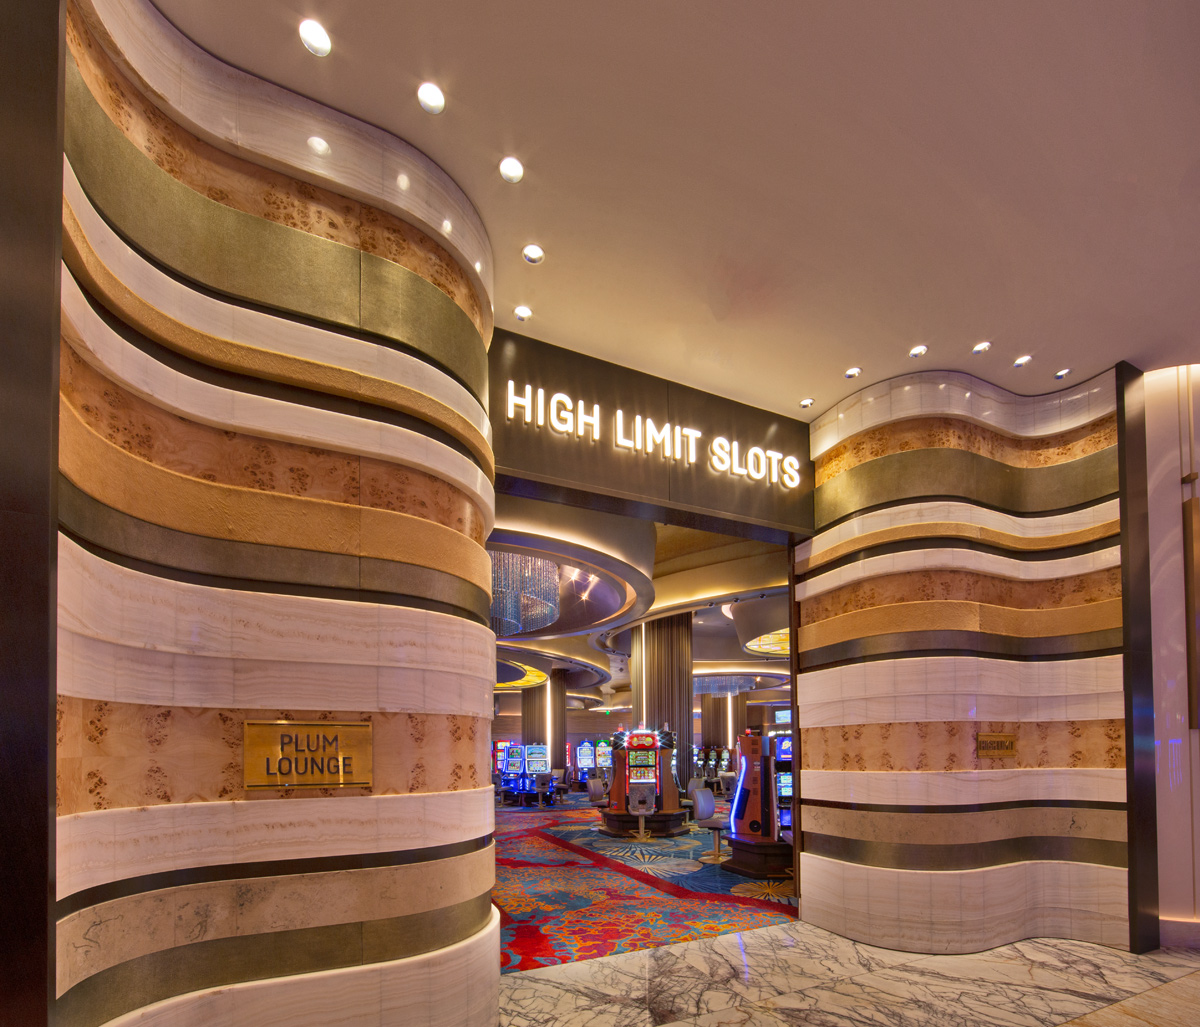 Hard Rock Hollywood casino high limits entrance.